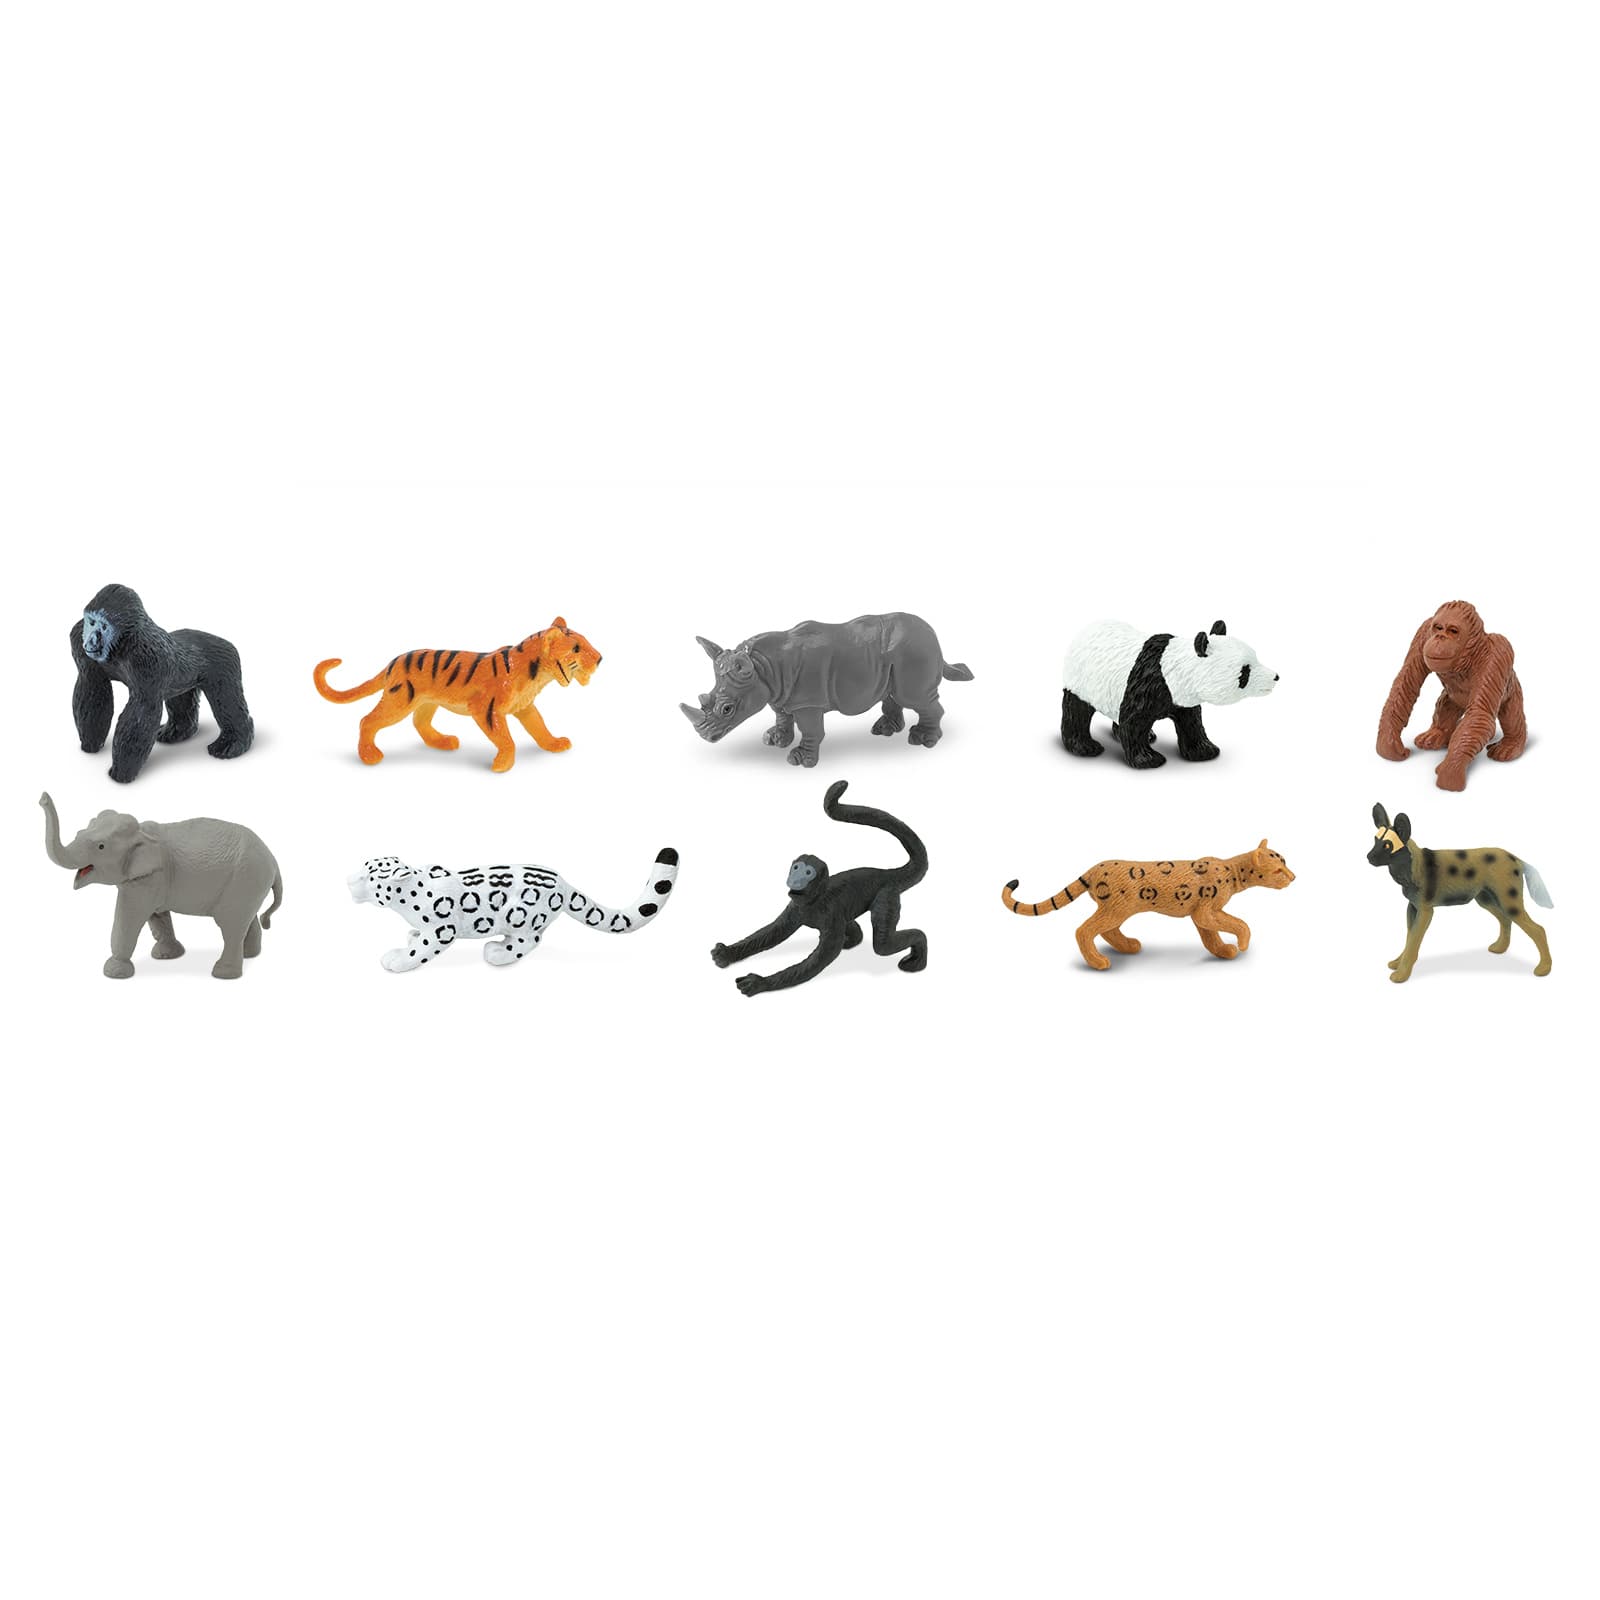 Find the Safari Ltd® Toob® Endangered Animals Land Species at Michaels